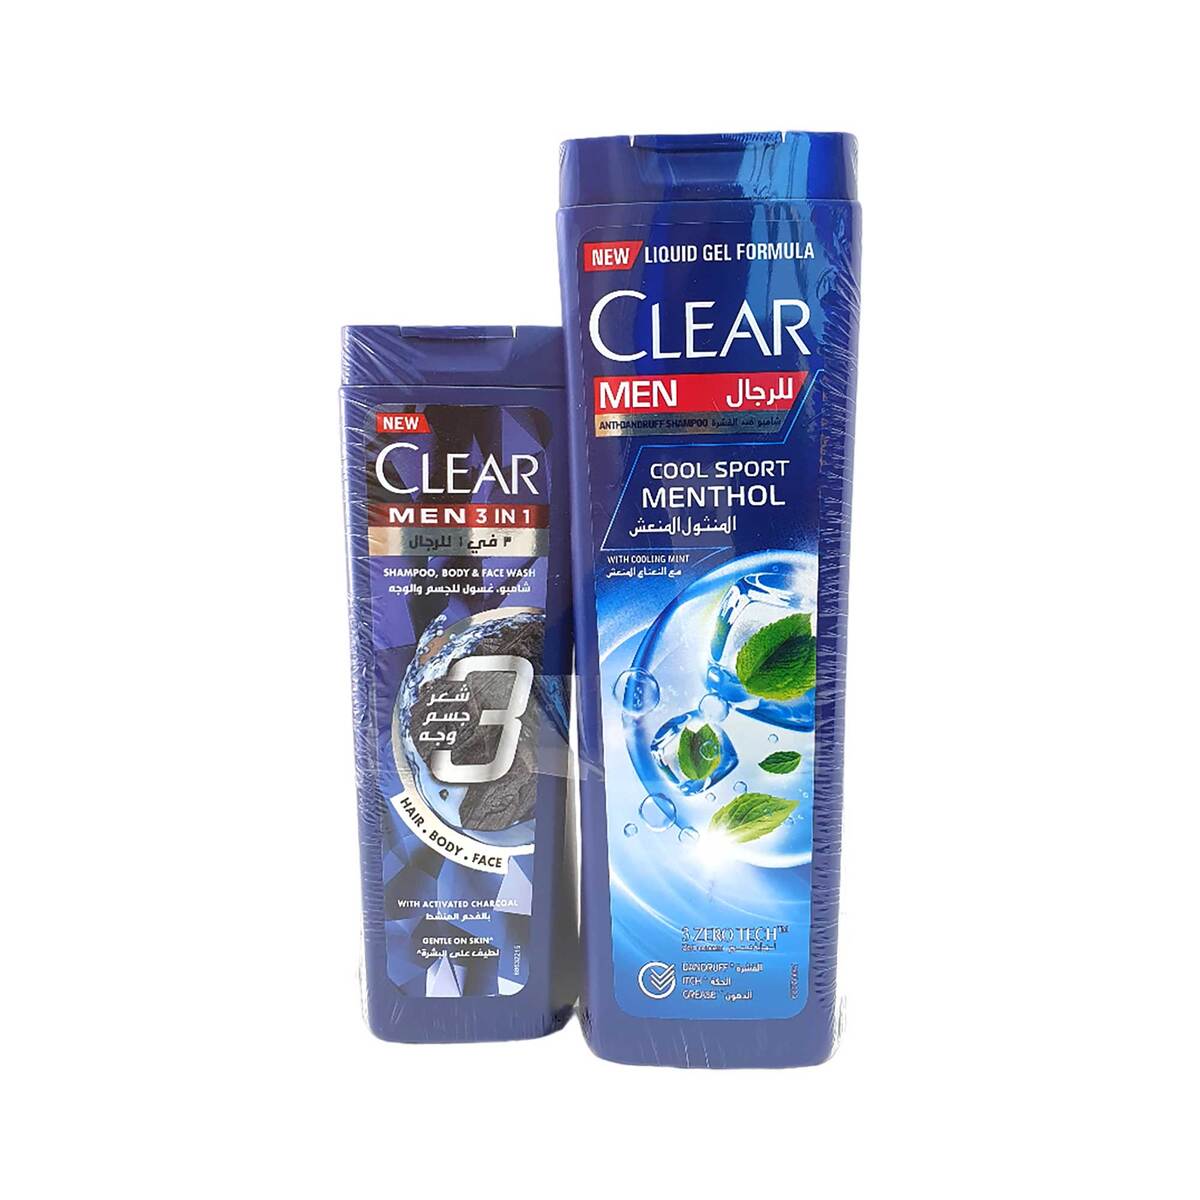 Clear Men's Cool Sport Menthol Anti-Dandruff Shampoo 400ml + Clear Men 3in1 200ml Assorted